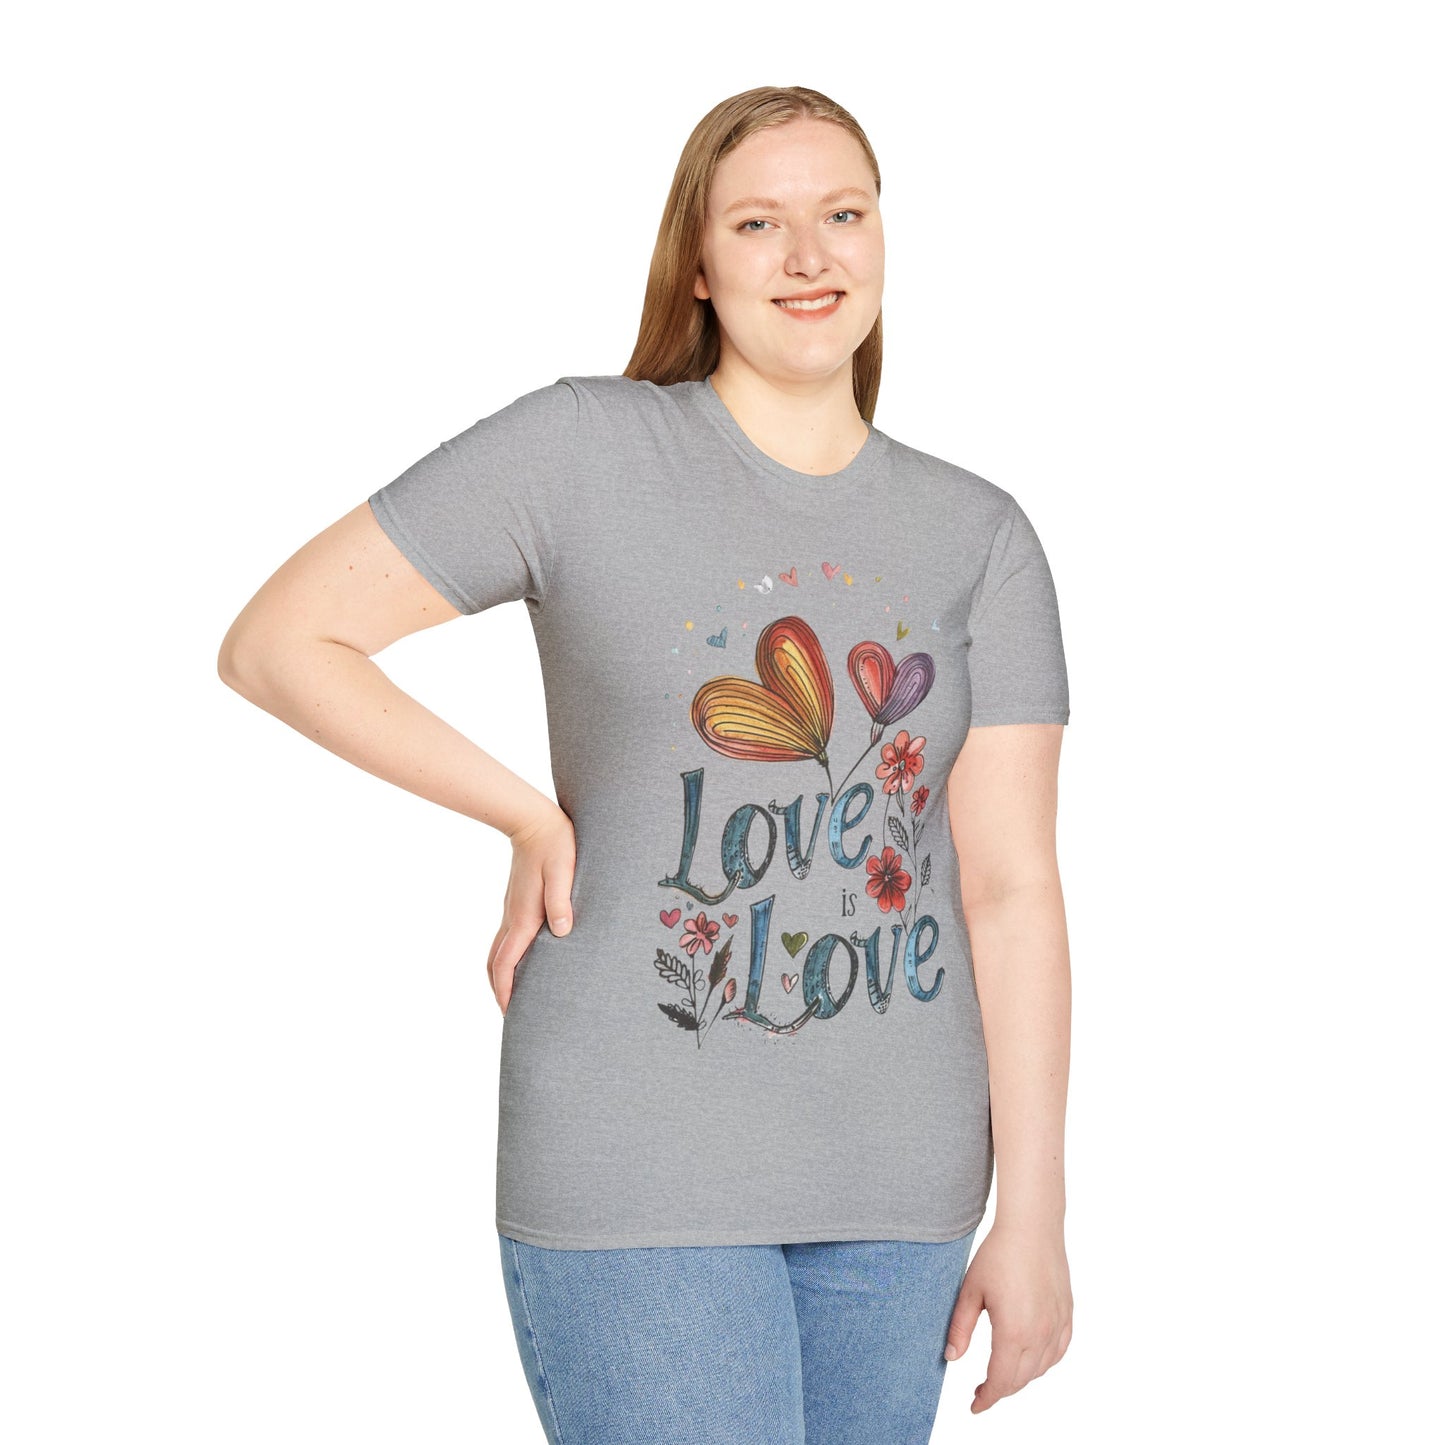 Love is Love Pride T-Shirt Statement Activist tshirt Defend Equality tee Activism Protest Liberal shirt Leftist Cute t shirt Vote